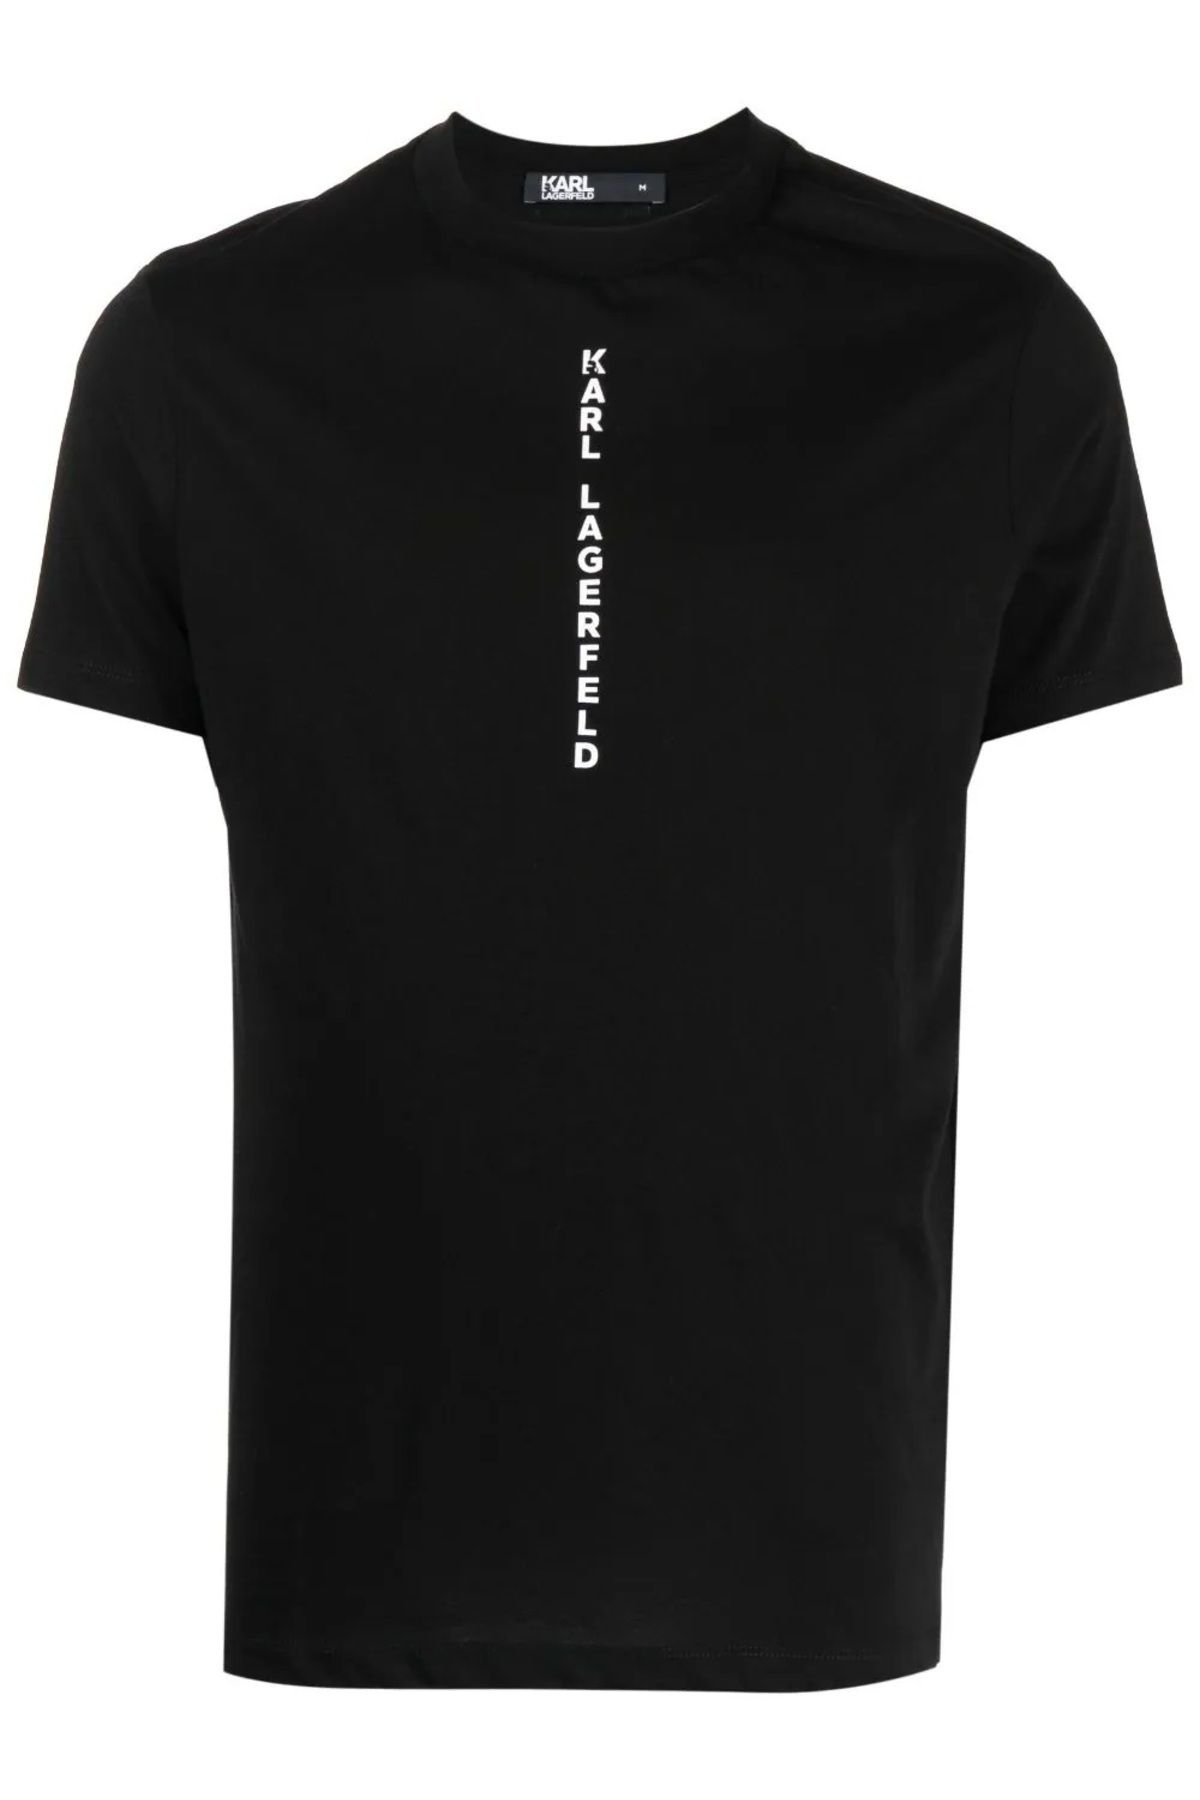 Karl Lagerfeld Logo T-shirt